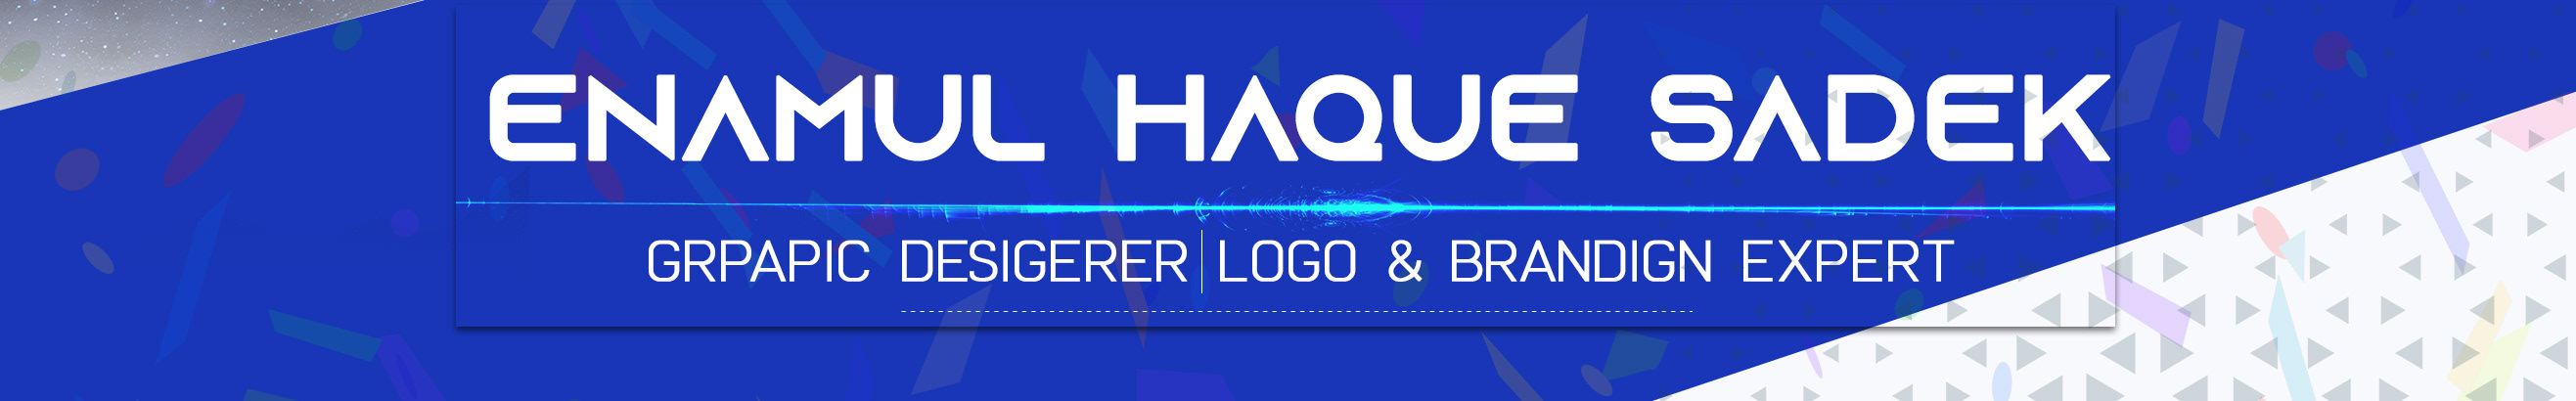 Enamul Haque Sadek's profile banner